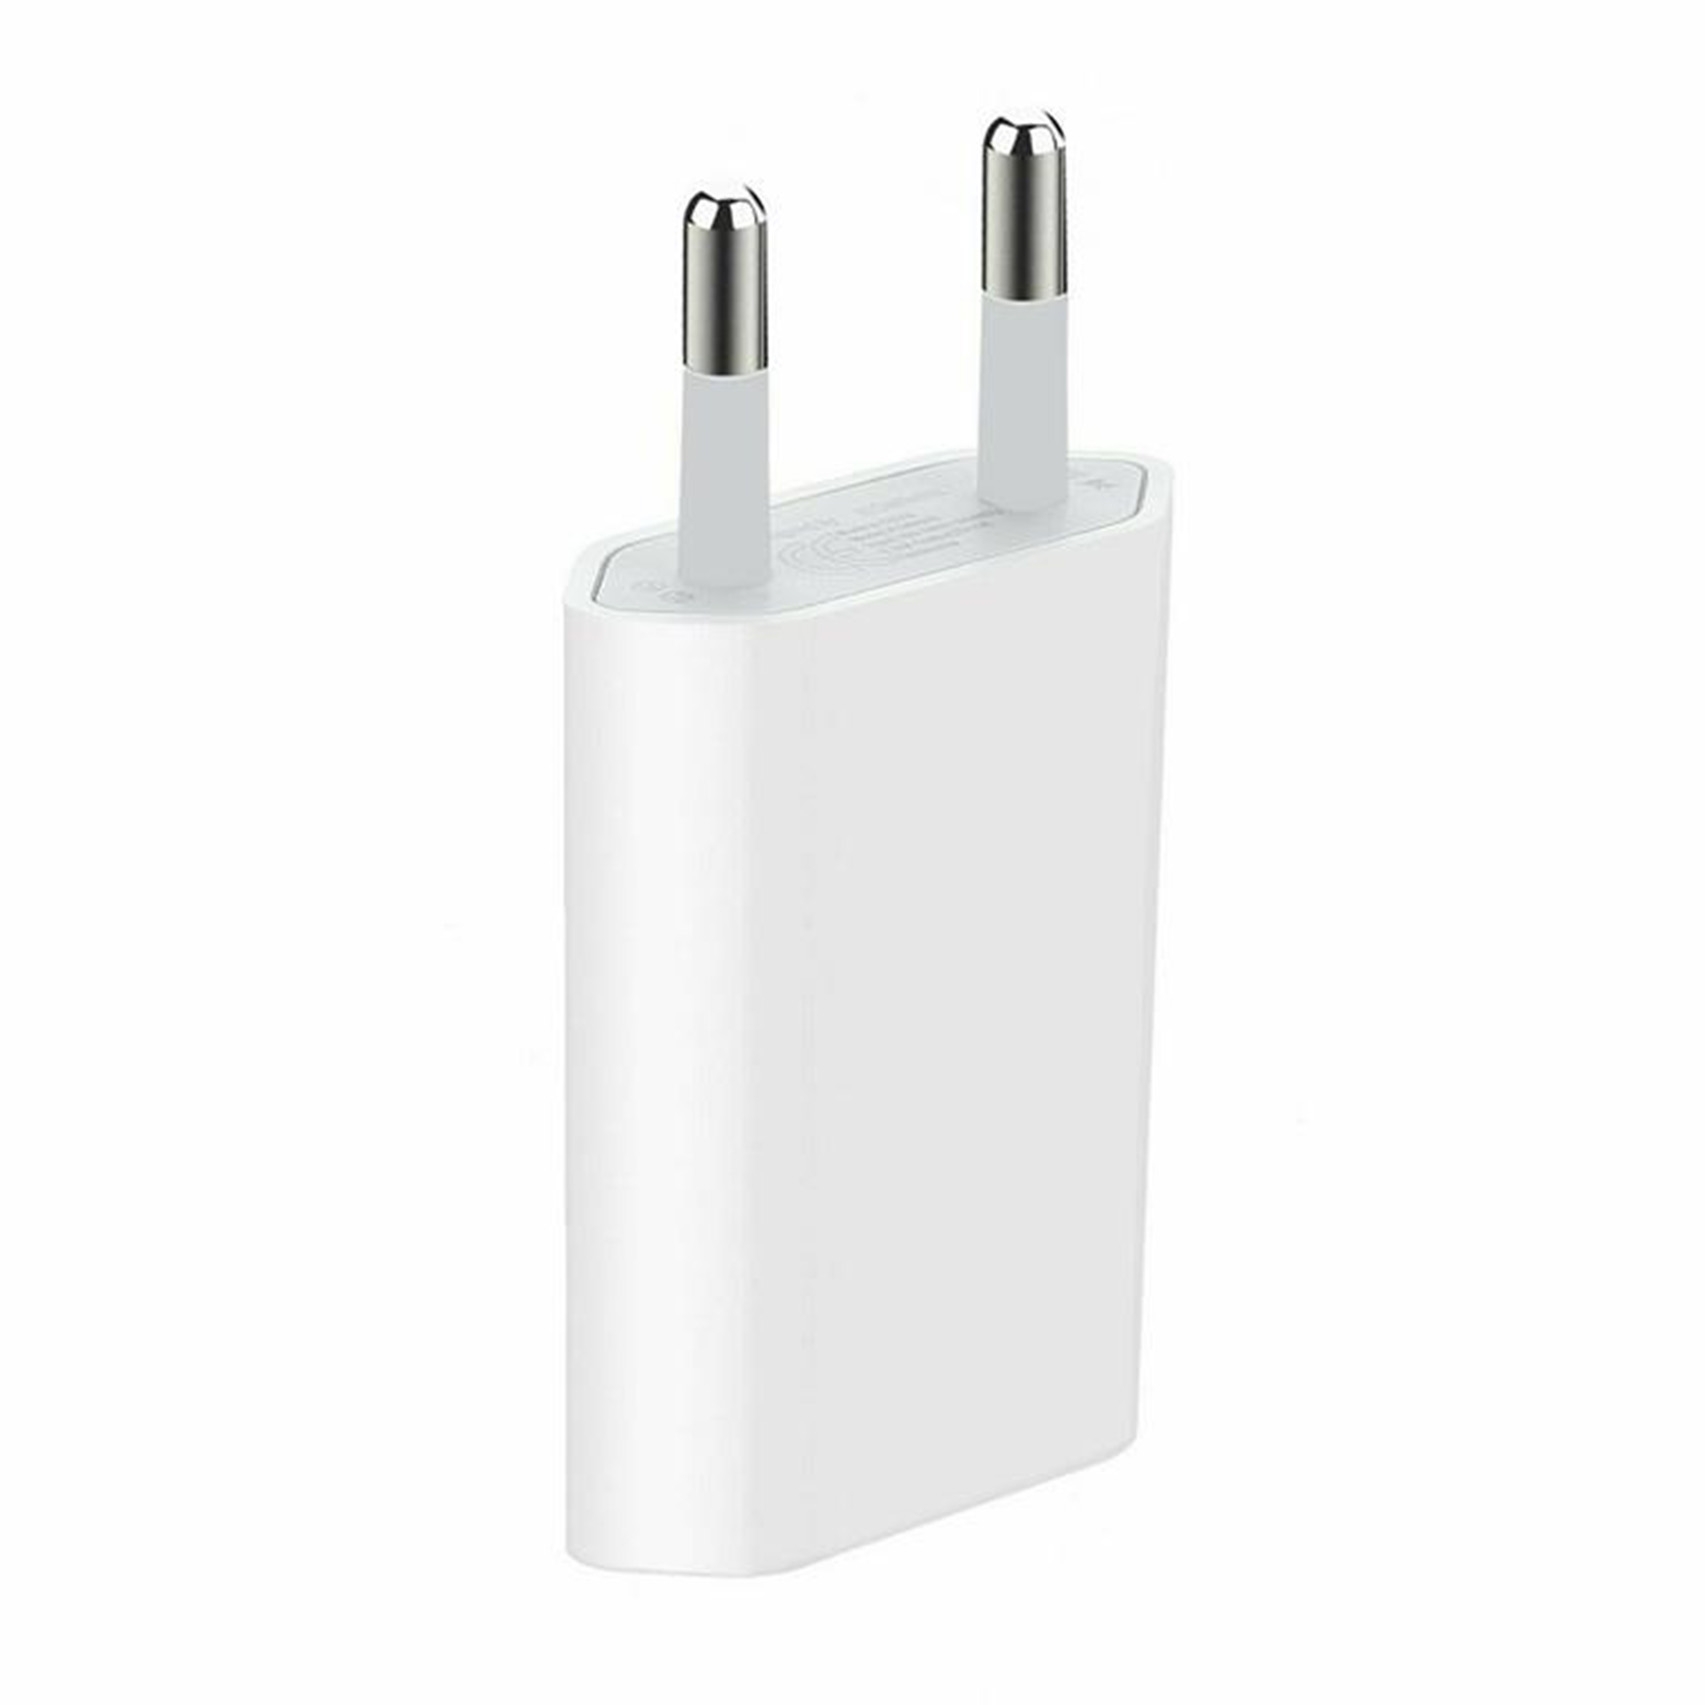 iPhone X 5W USB Power Adapter